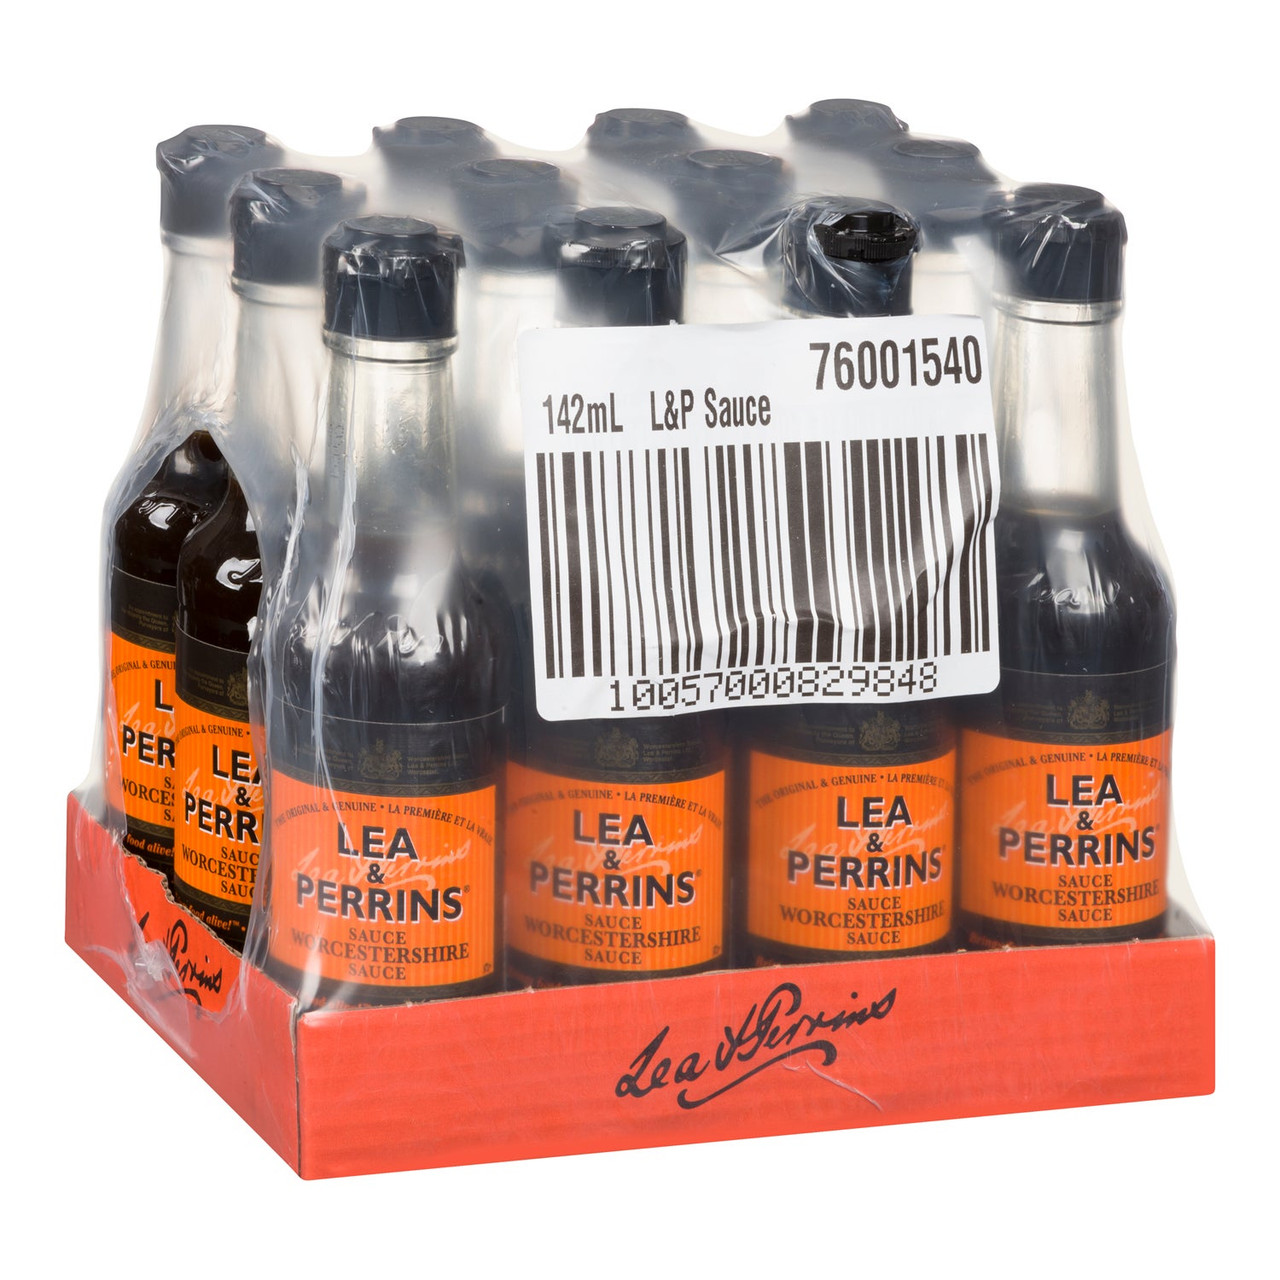 Lea & Perrin Worcestershire Sauce | 142ML/Unit, 12 Units/Case